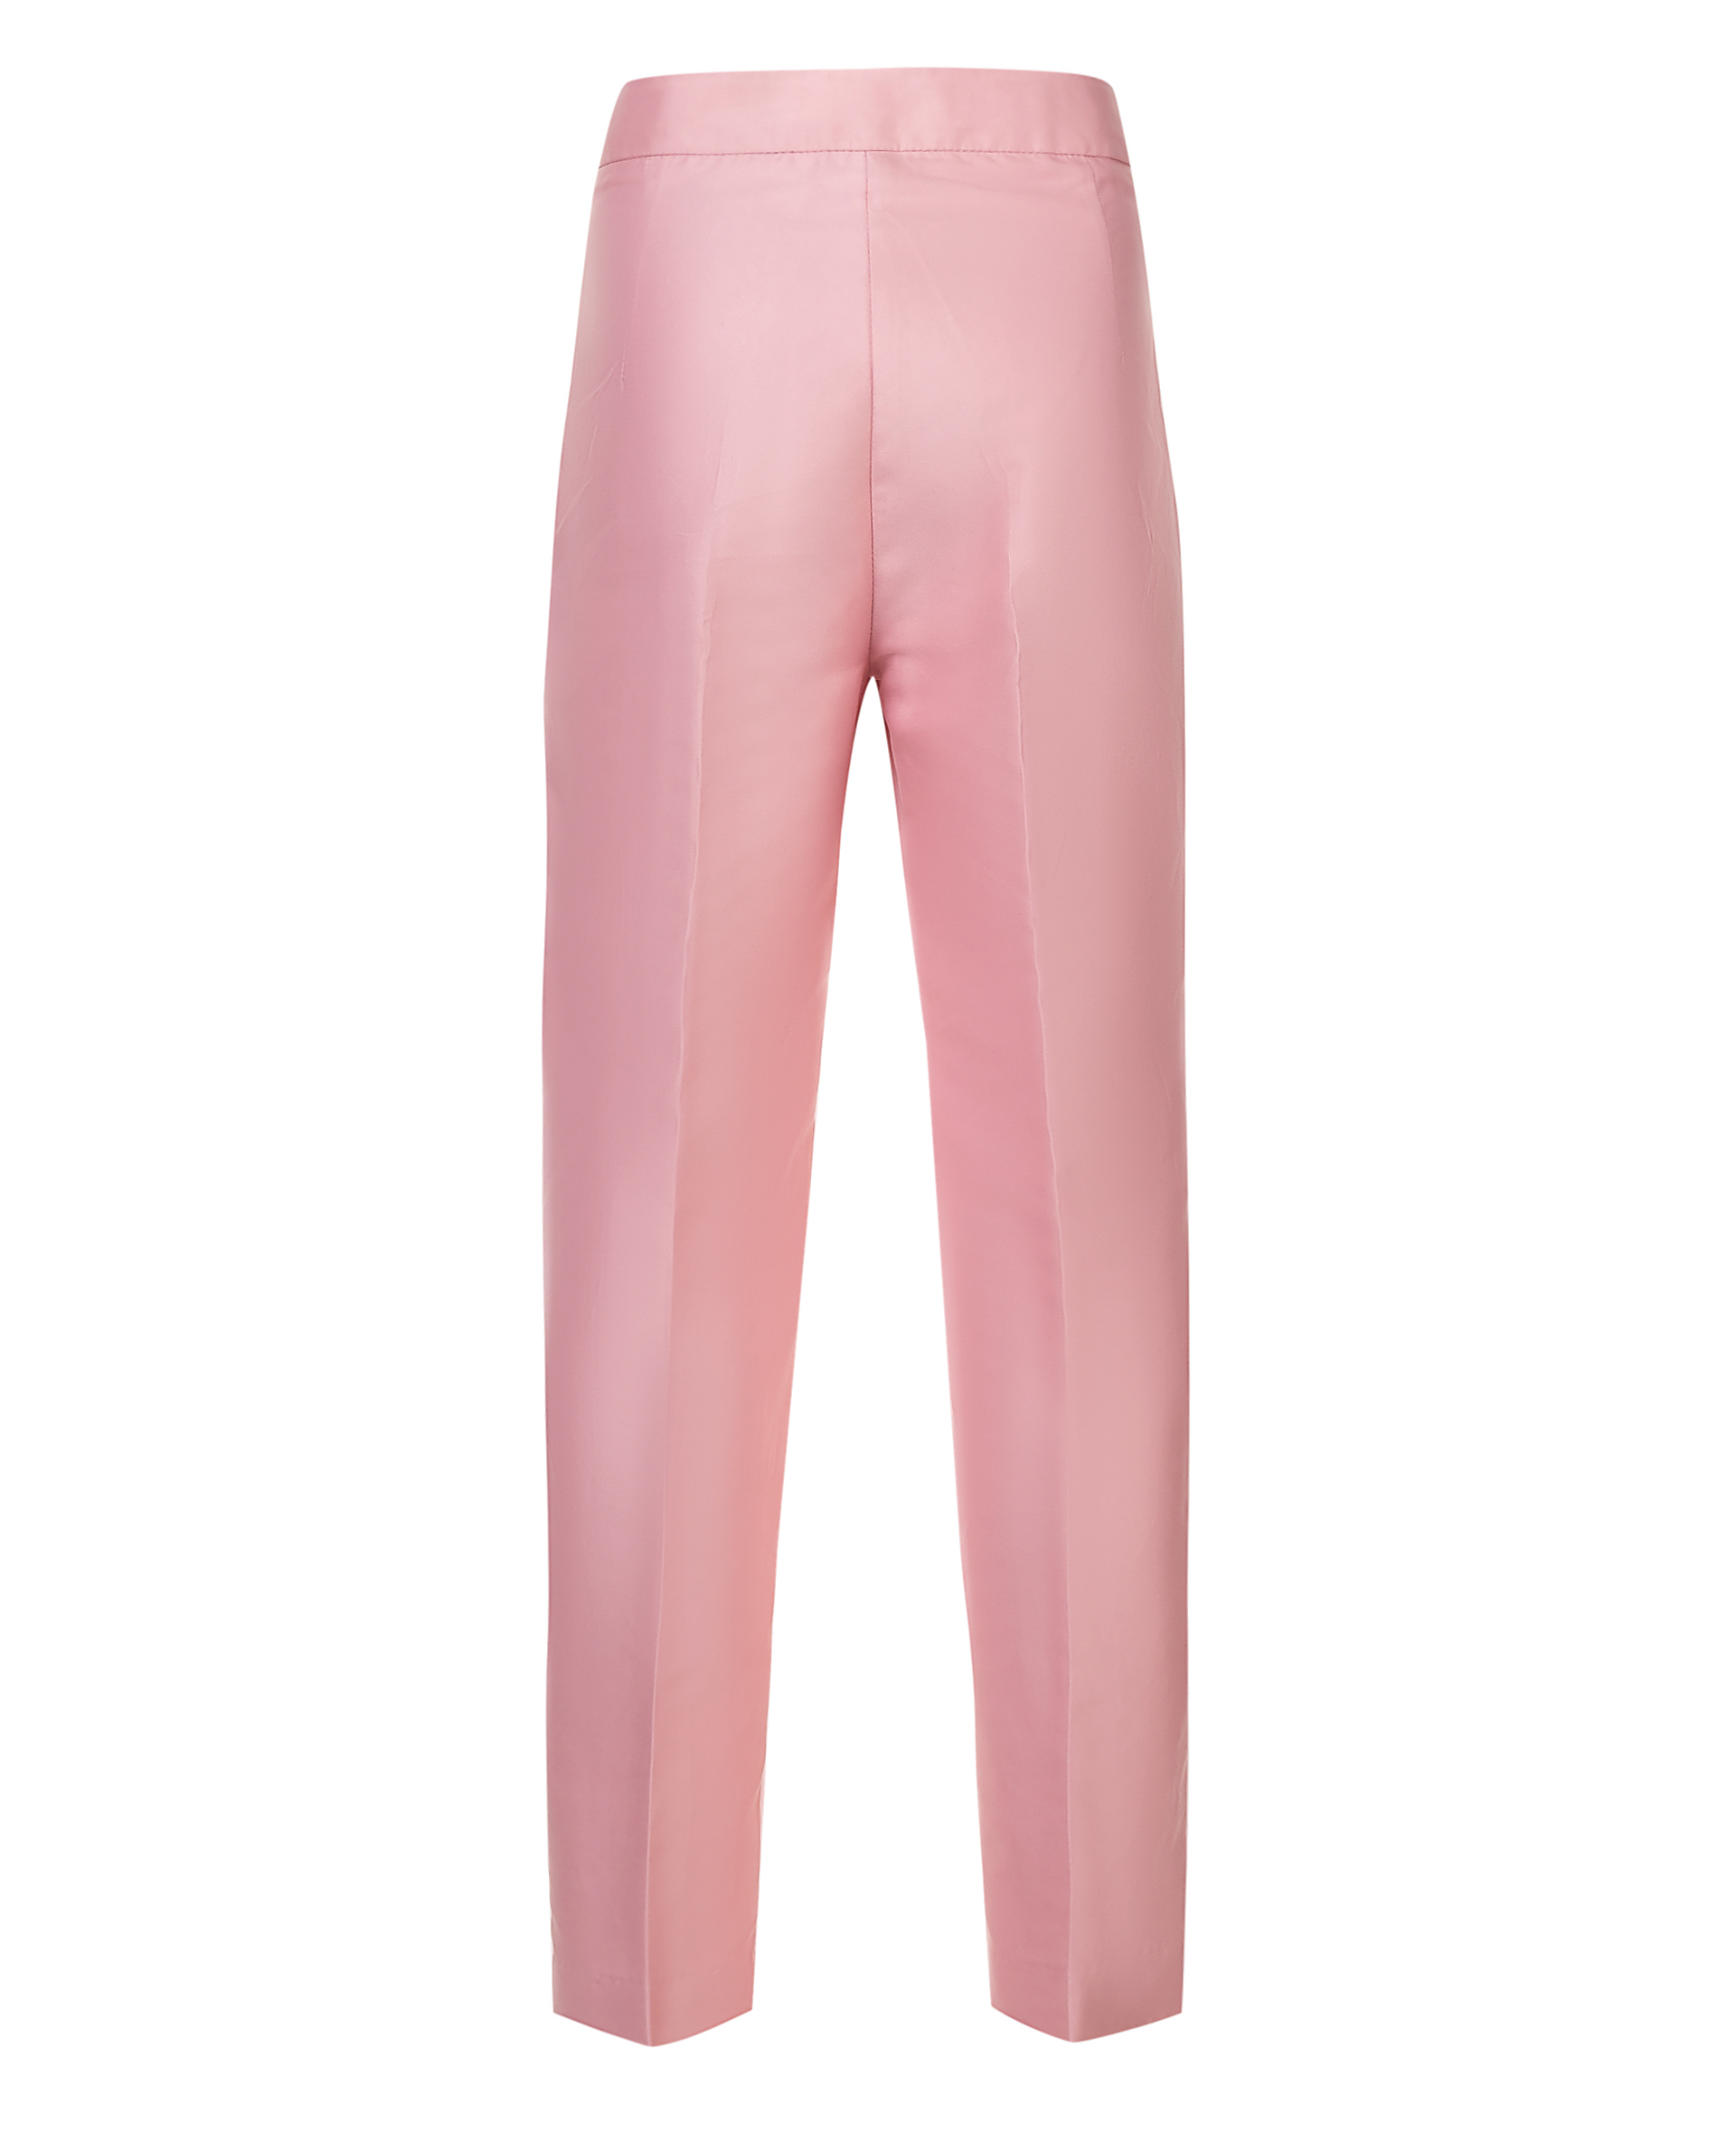 Розовые брюки Gulliver 119GPGJC6301, размер 134, цвет розовый - фото 2